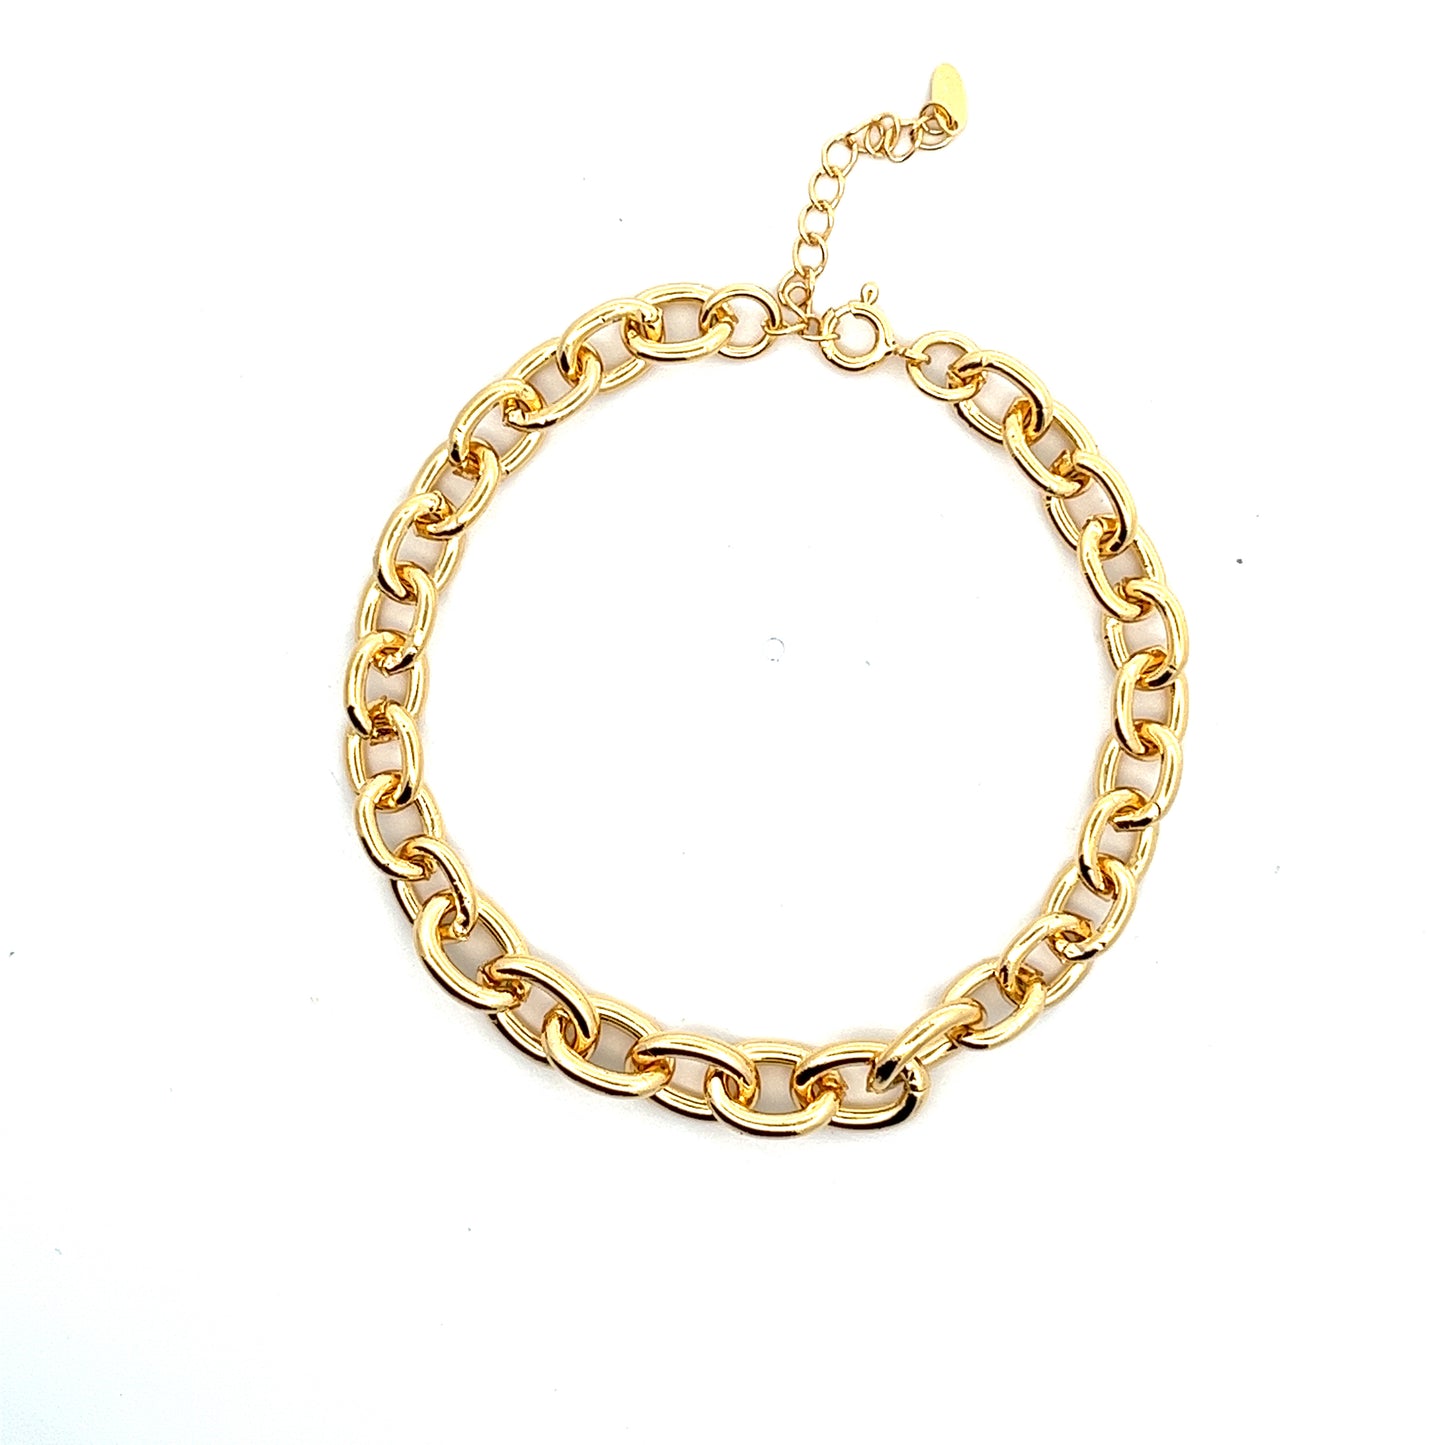 Clip Grarduer Bracelet In Gold